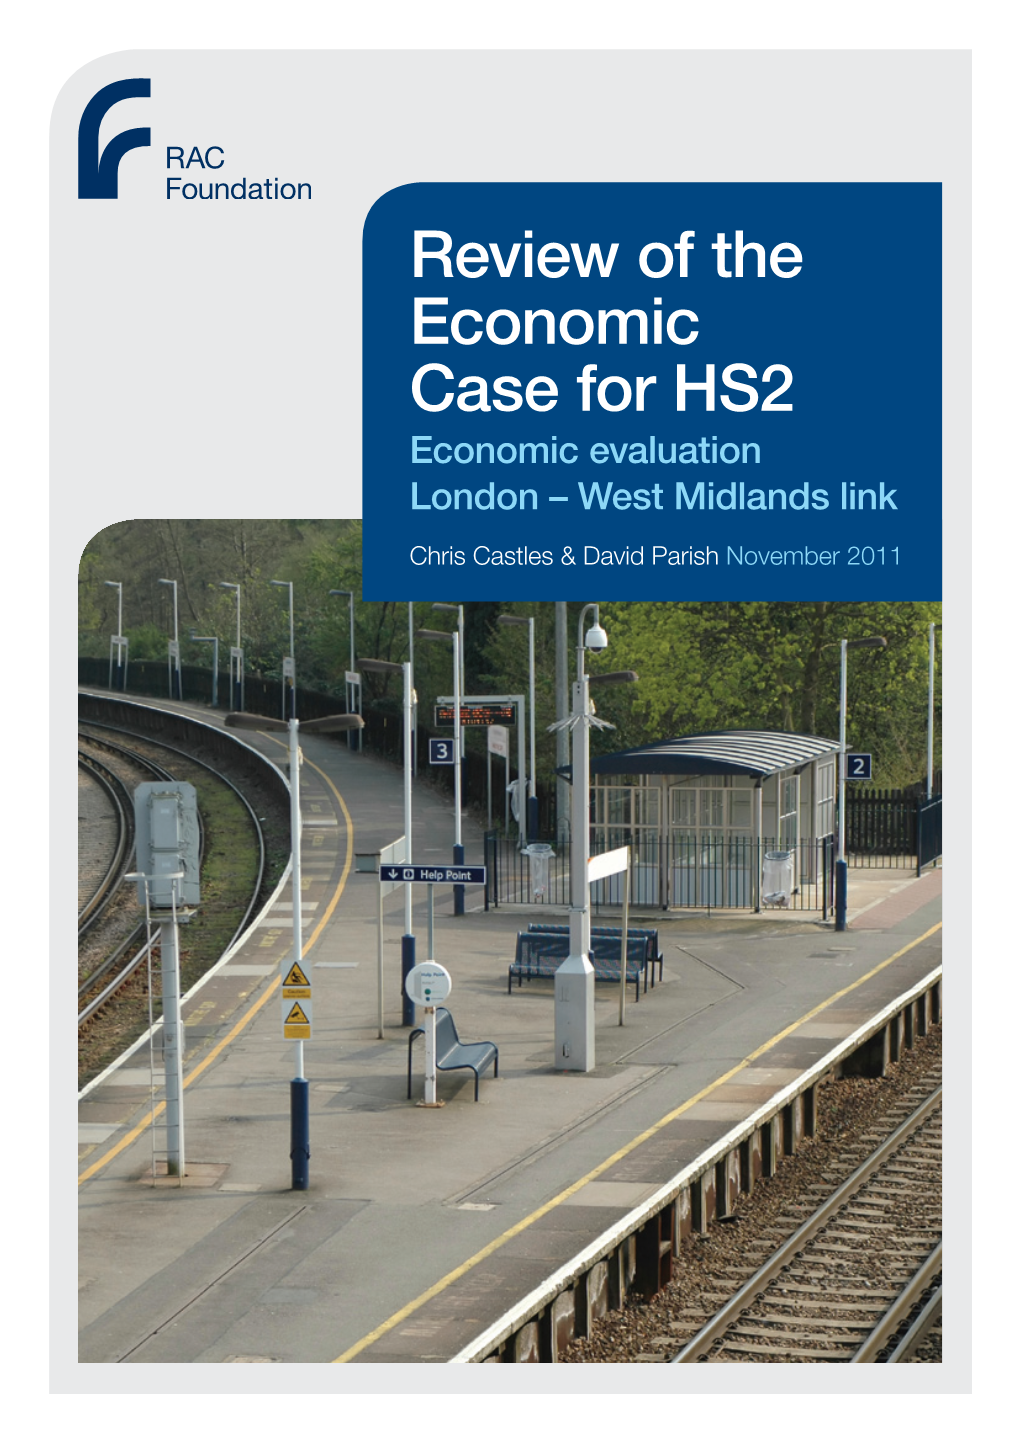 Review of the Economic Case for HS2 Economic Evaluation London – West Midlands Link